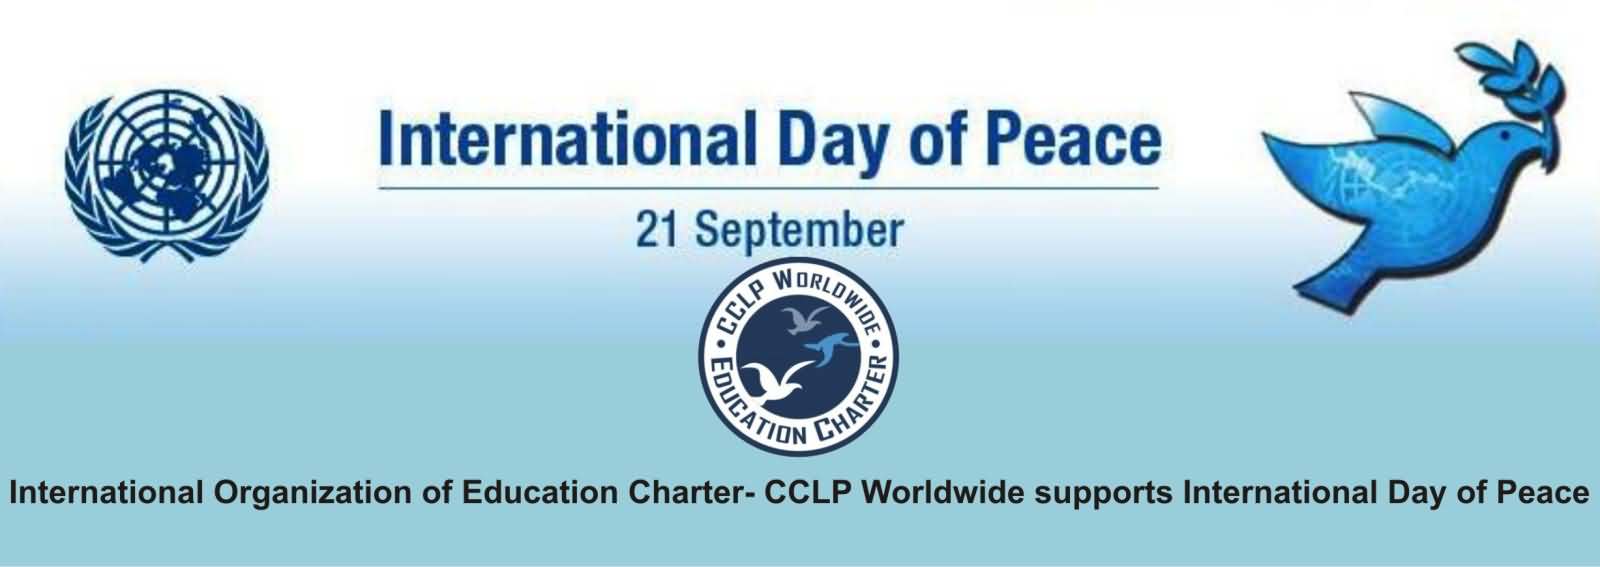 International Day Of Peace 21 September Site Banner Image